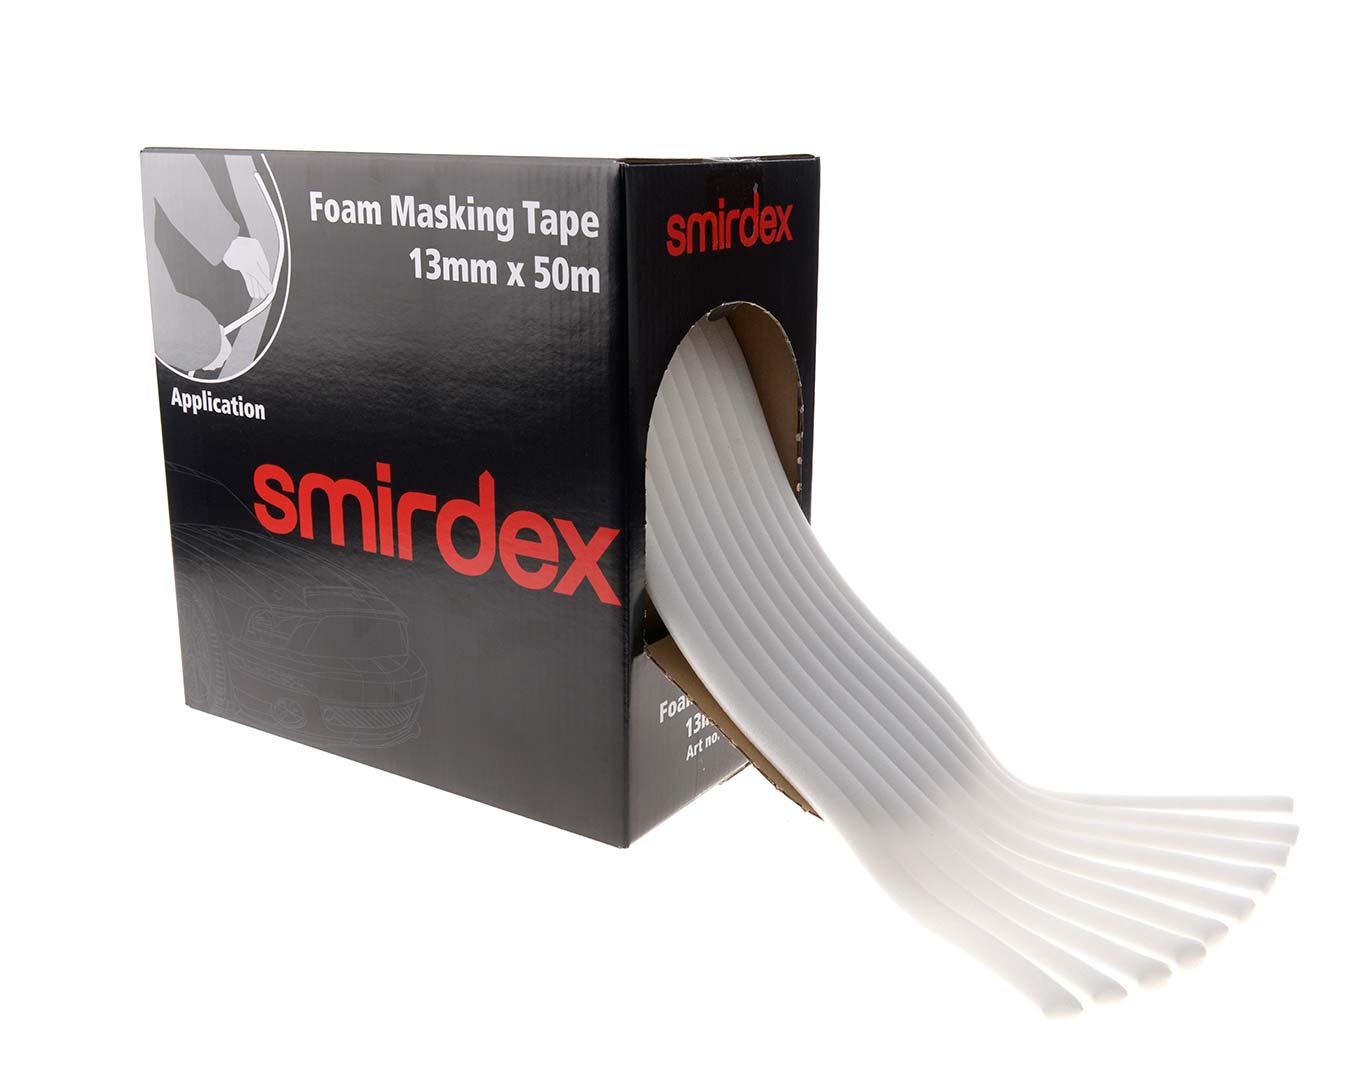 Foam Masking Tape 13mm x 50mt Smirdex